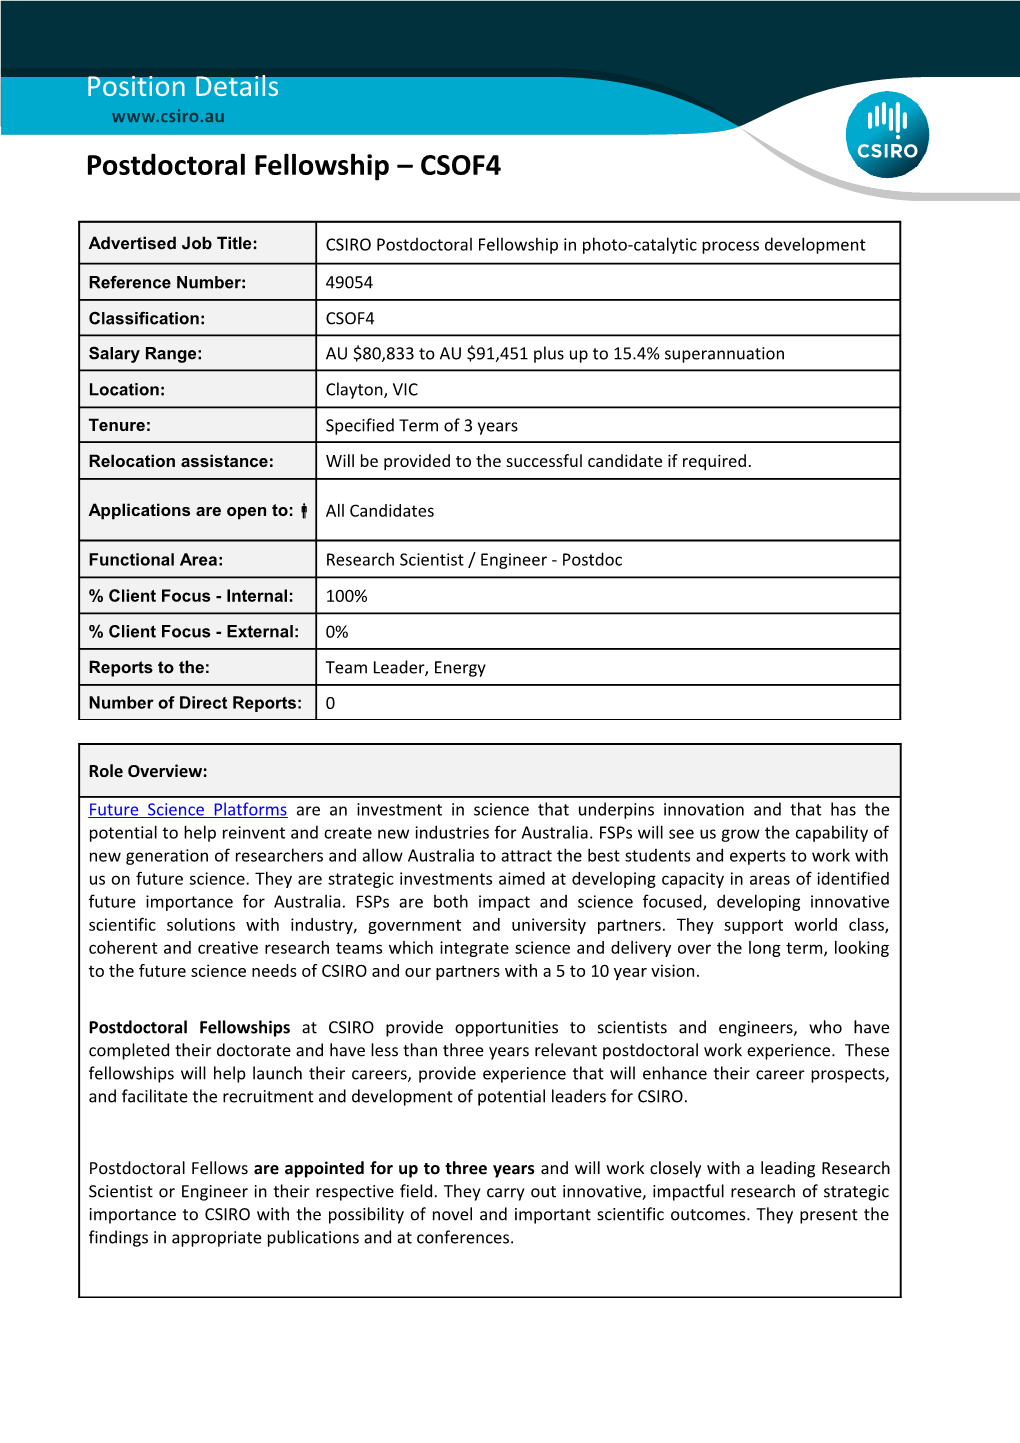 Position Details - Postdoctoral Fellowship - CSOF4 s7